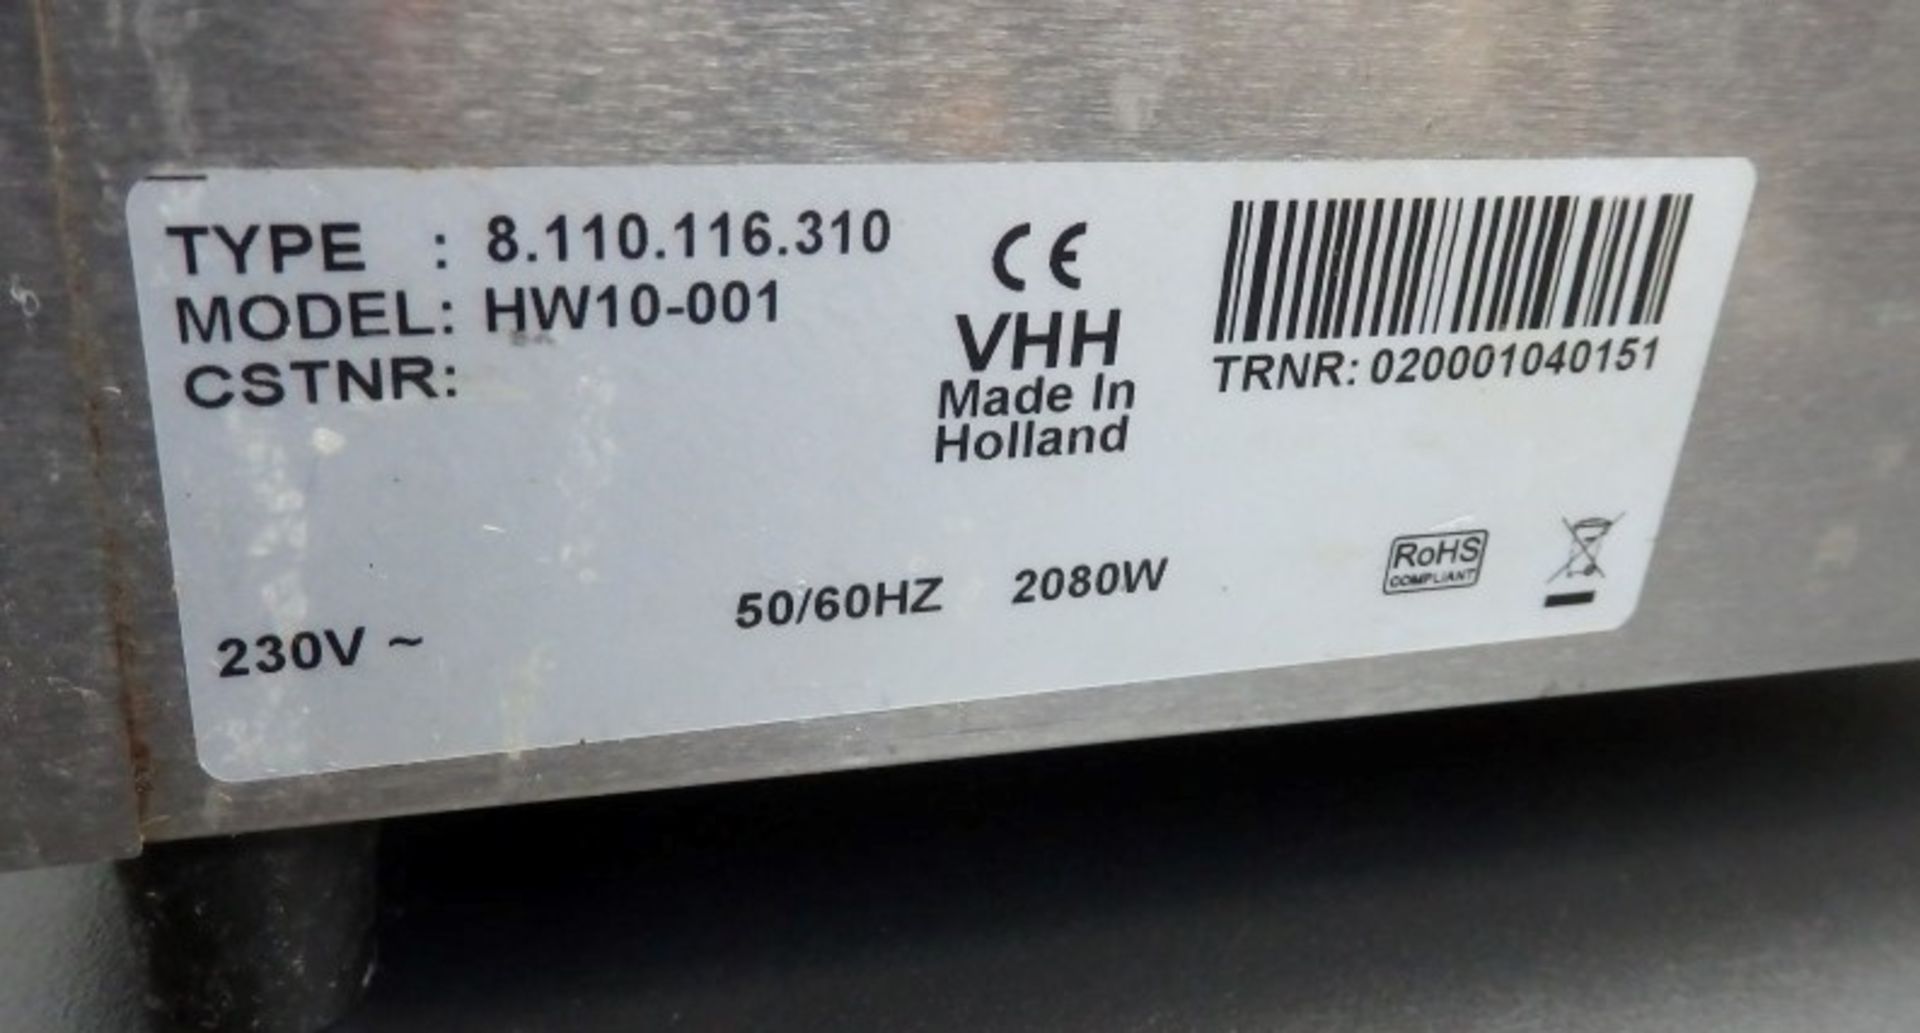 1 x Bravilor HW10 Commercial Hot Water Dispenser 2Ltr - Dimensions 43(H) x 20.5(W) x 35.5(D)cm - - Image 4 of 7